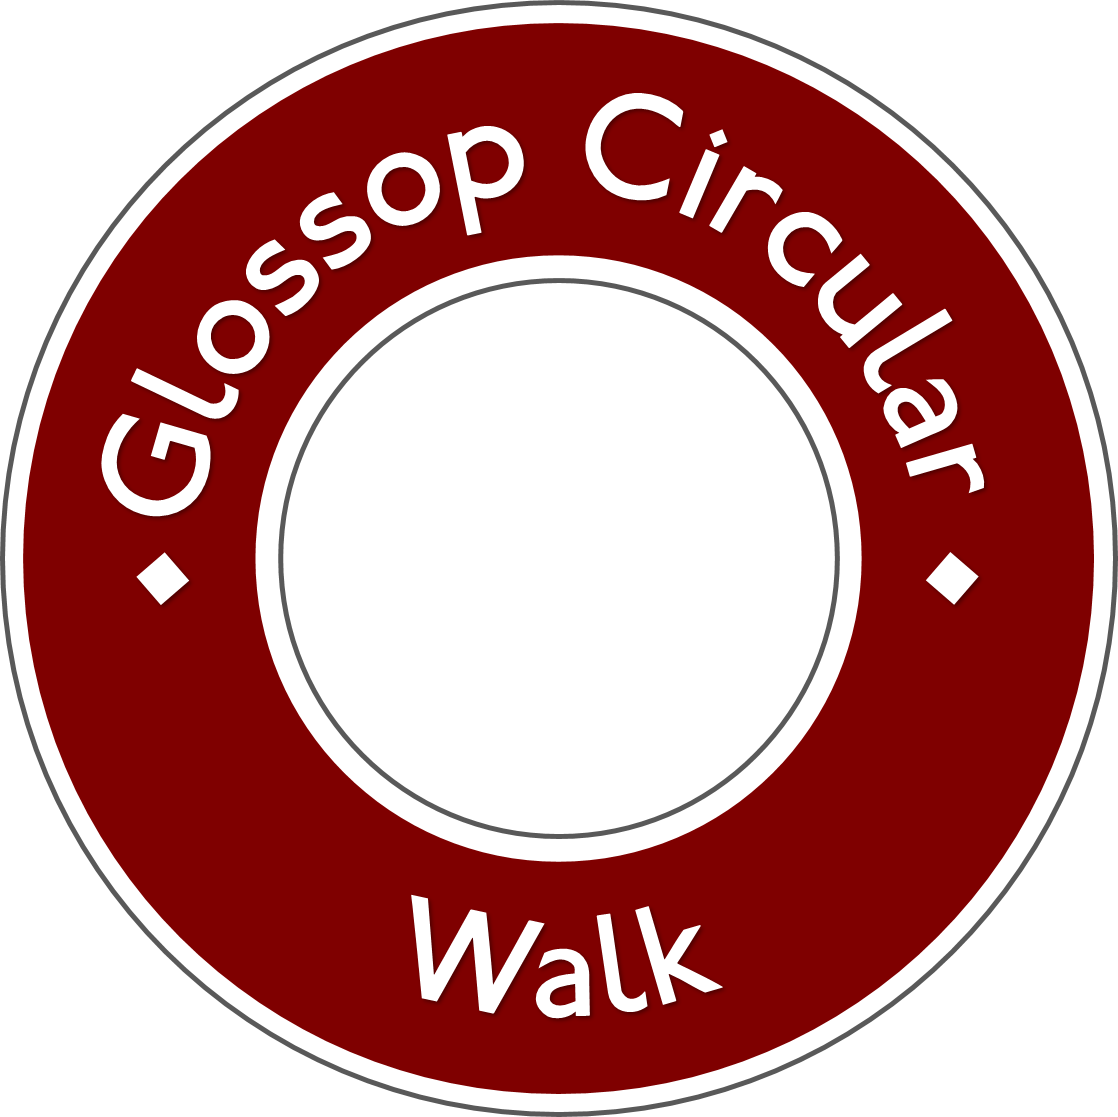 Glossop Circular Walk